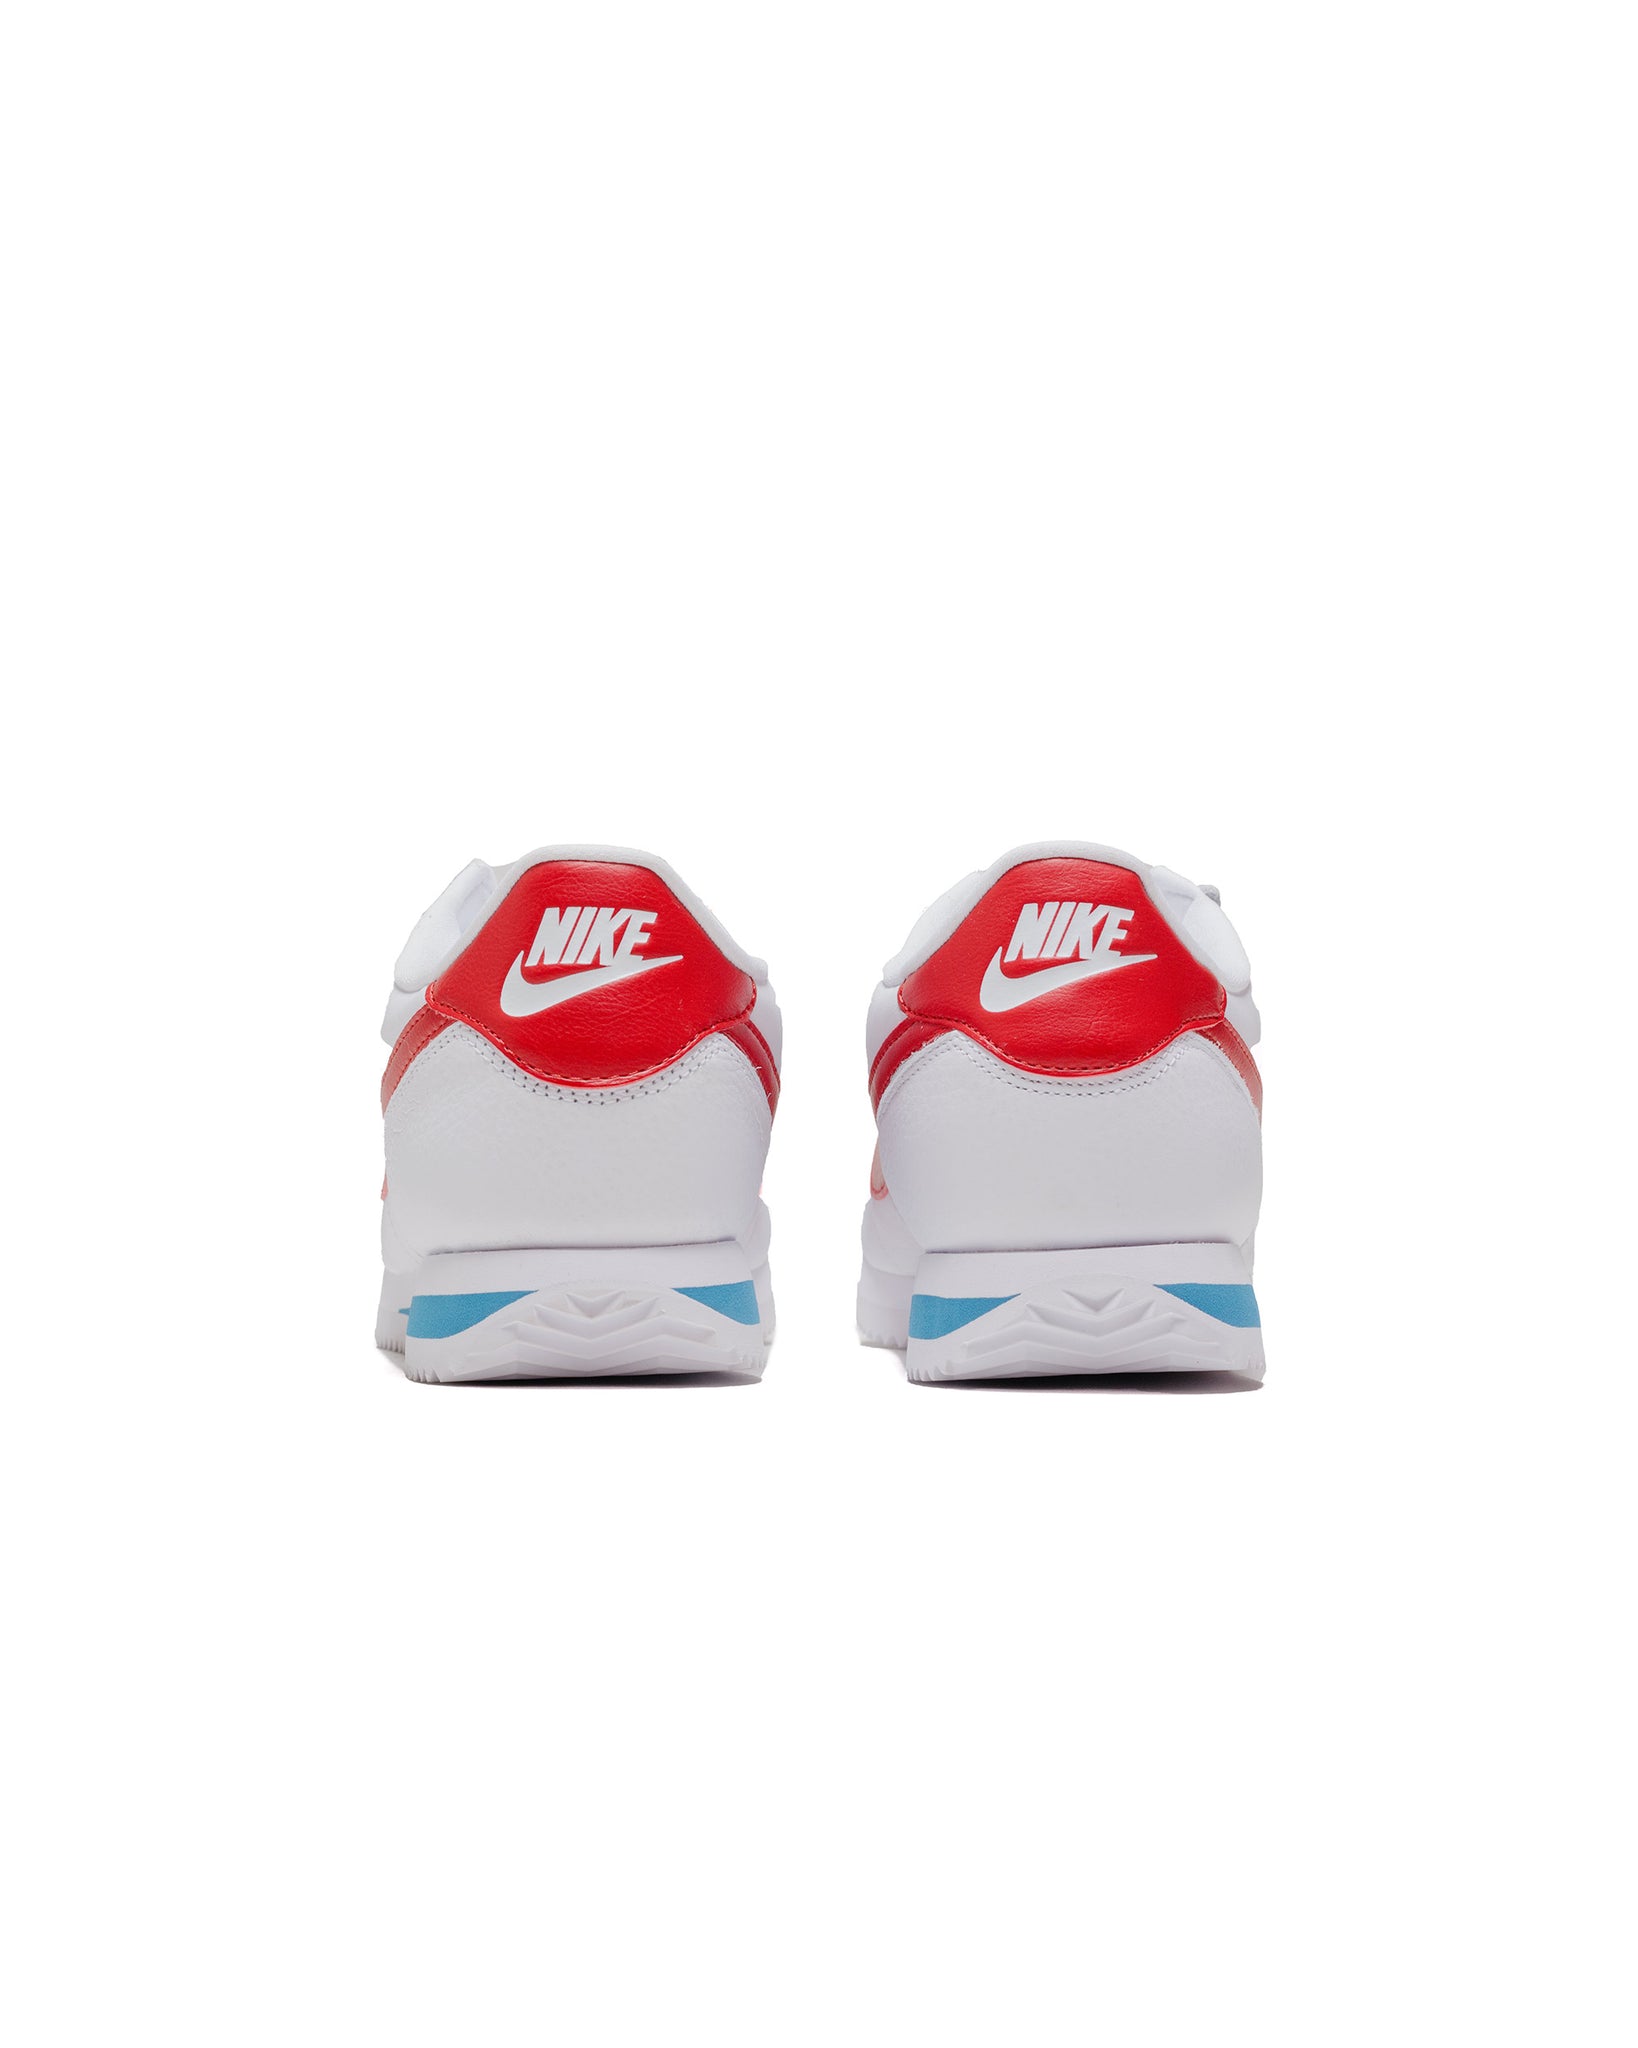 Nike Cortez Varsity Red/White/Blue back